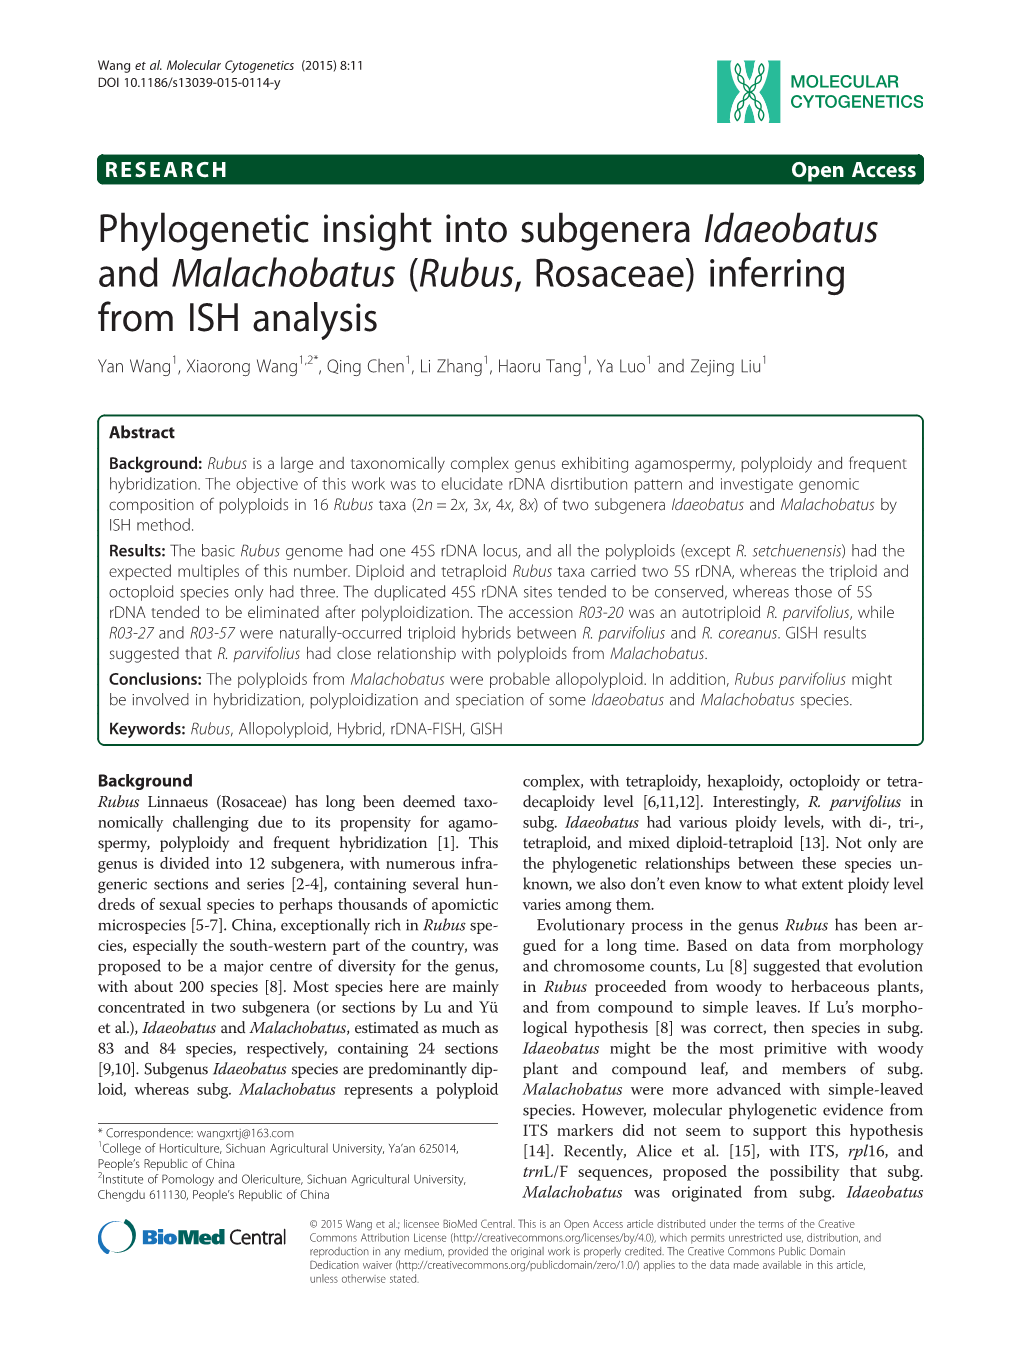 Phylogenetic Insight Into Subgenera Idaeobatus and Malachobatus